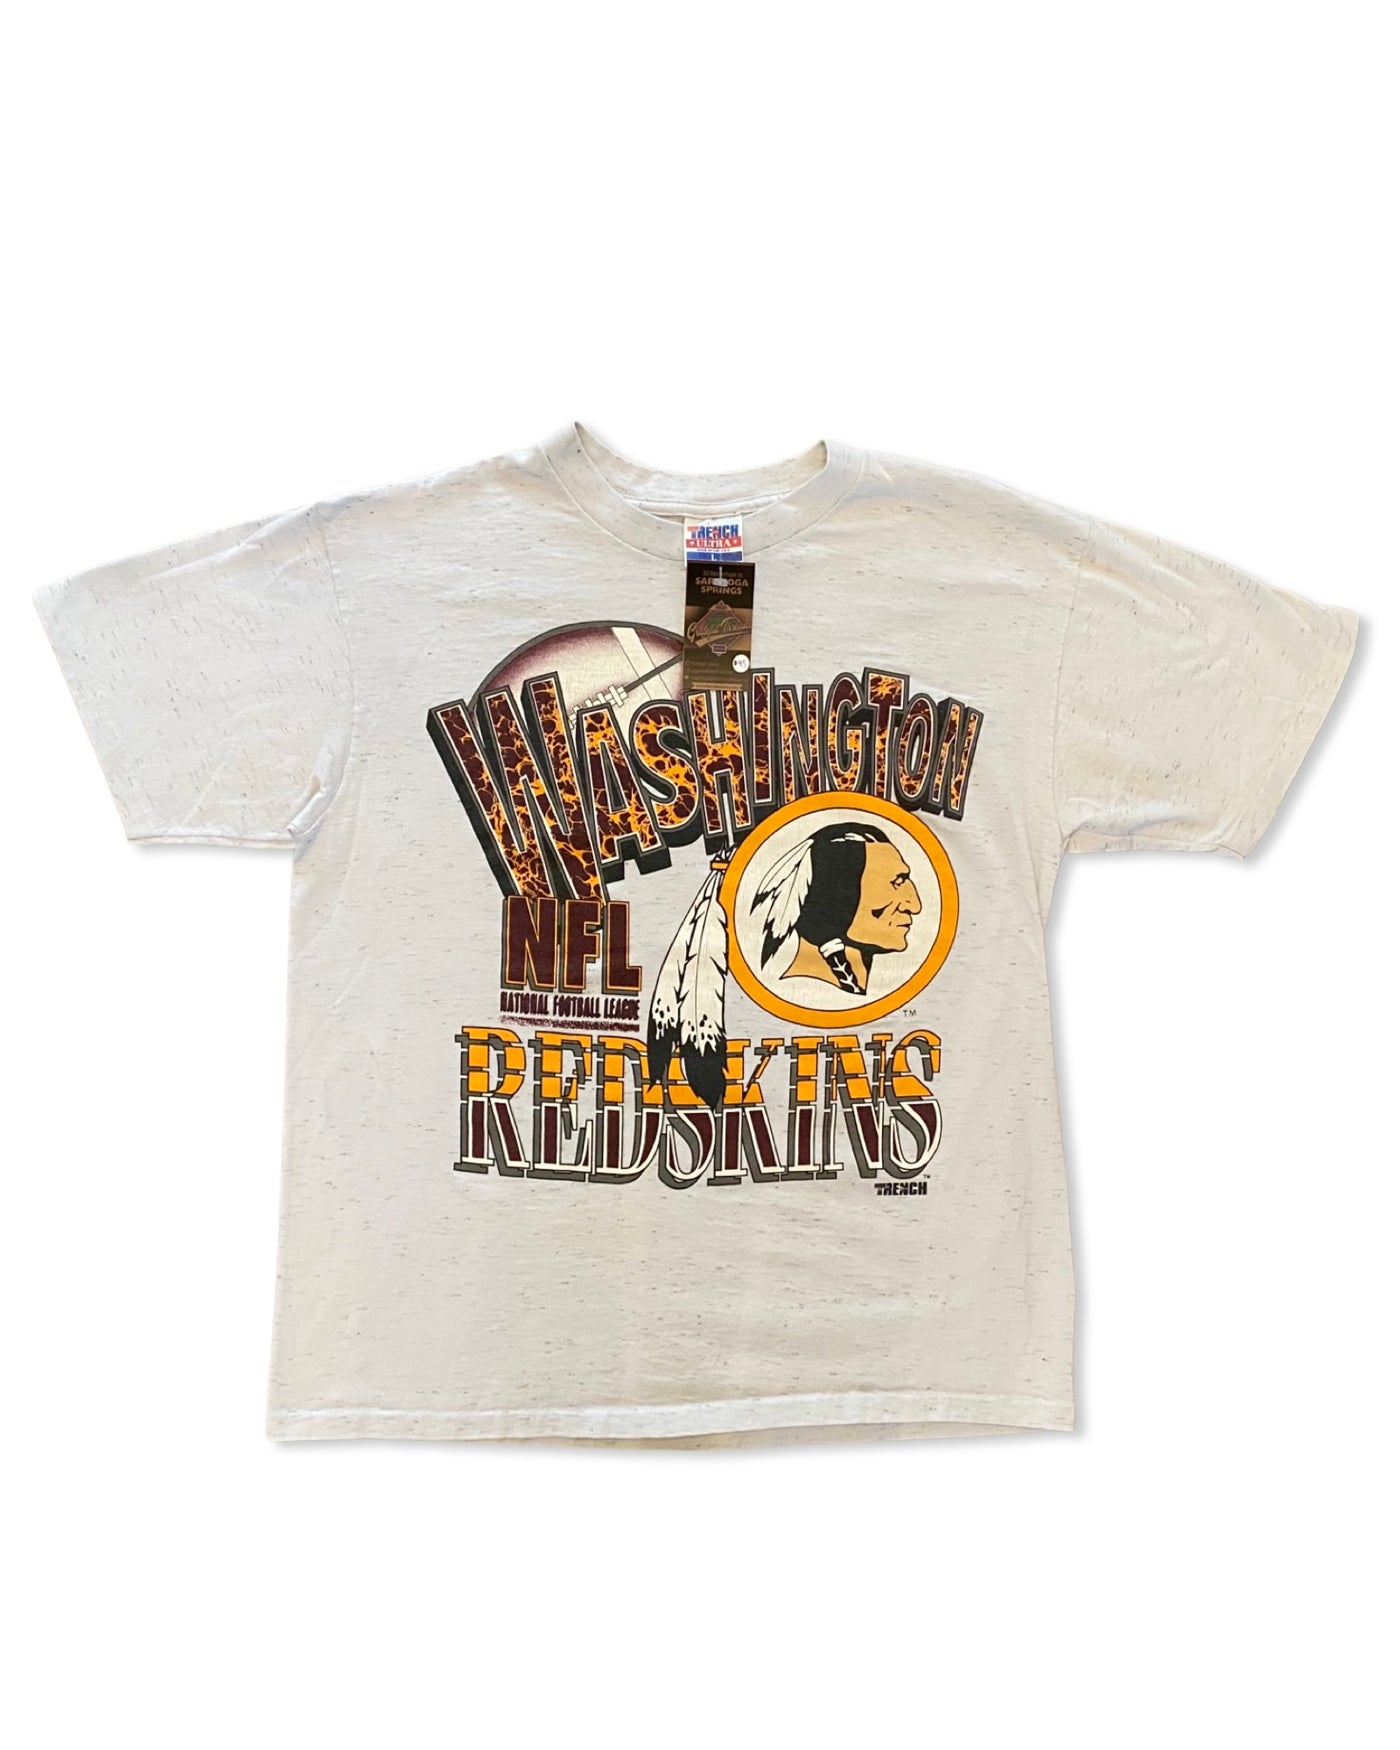 Vintage 90s Washington Redskins T-Shirt